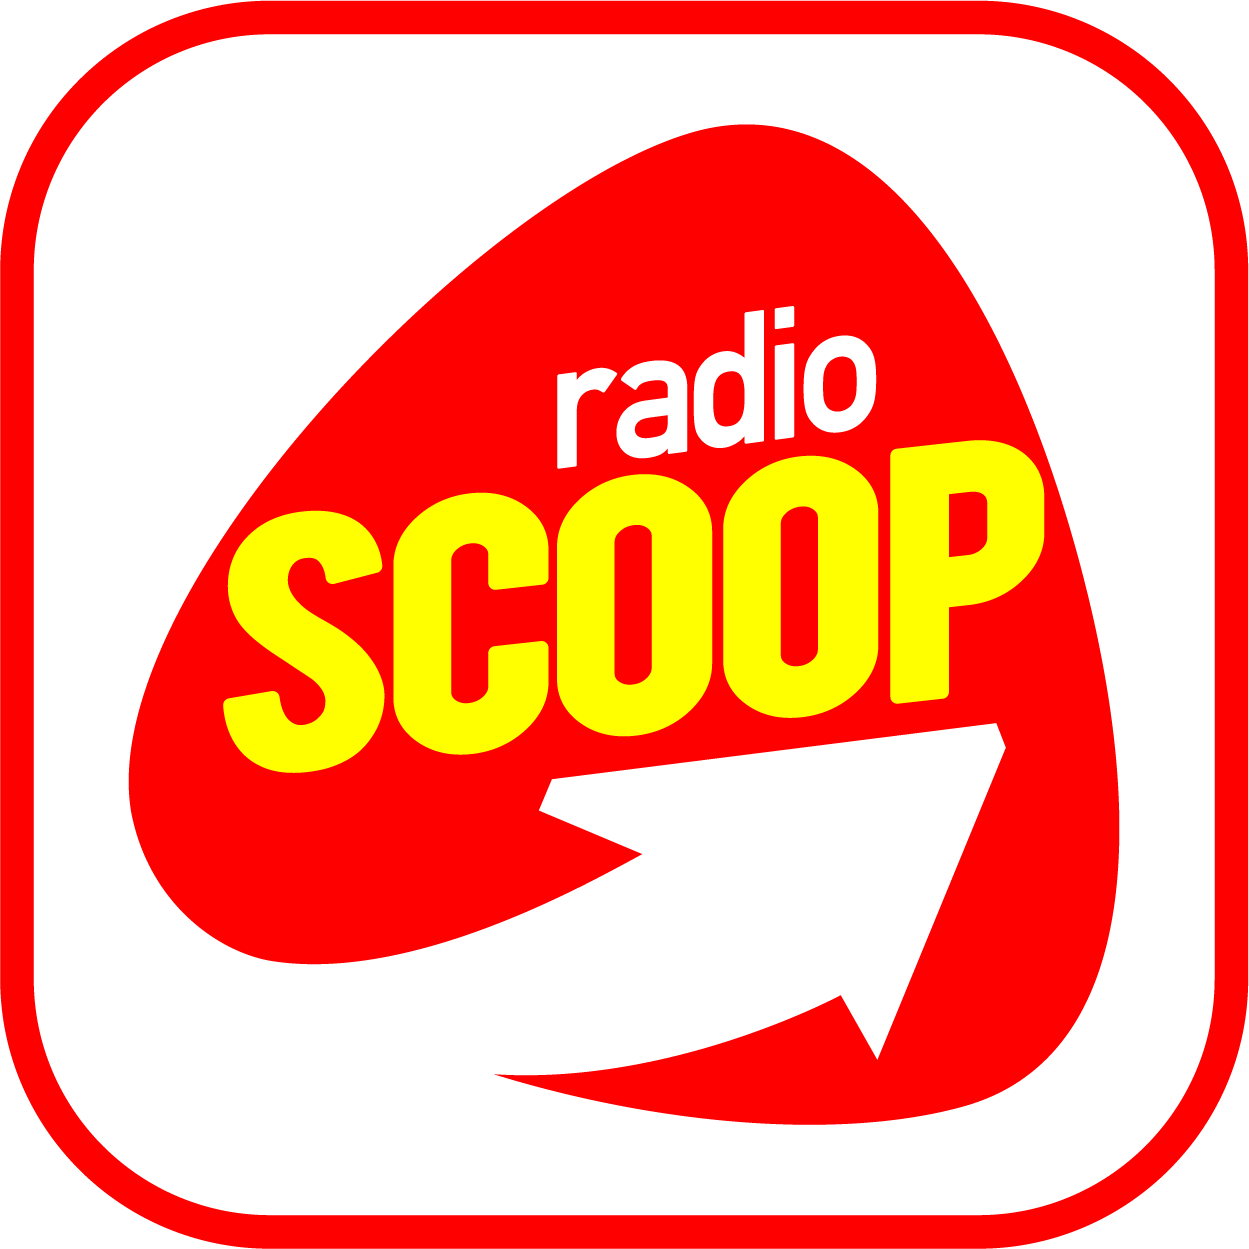 RADIO-SCOOP-RVB-2018